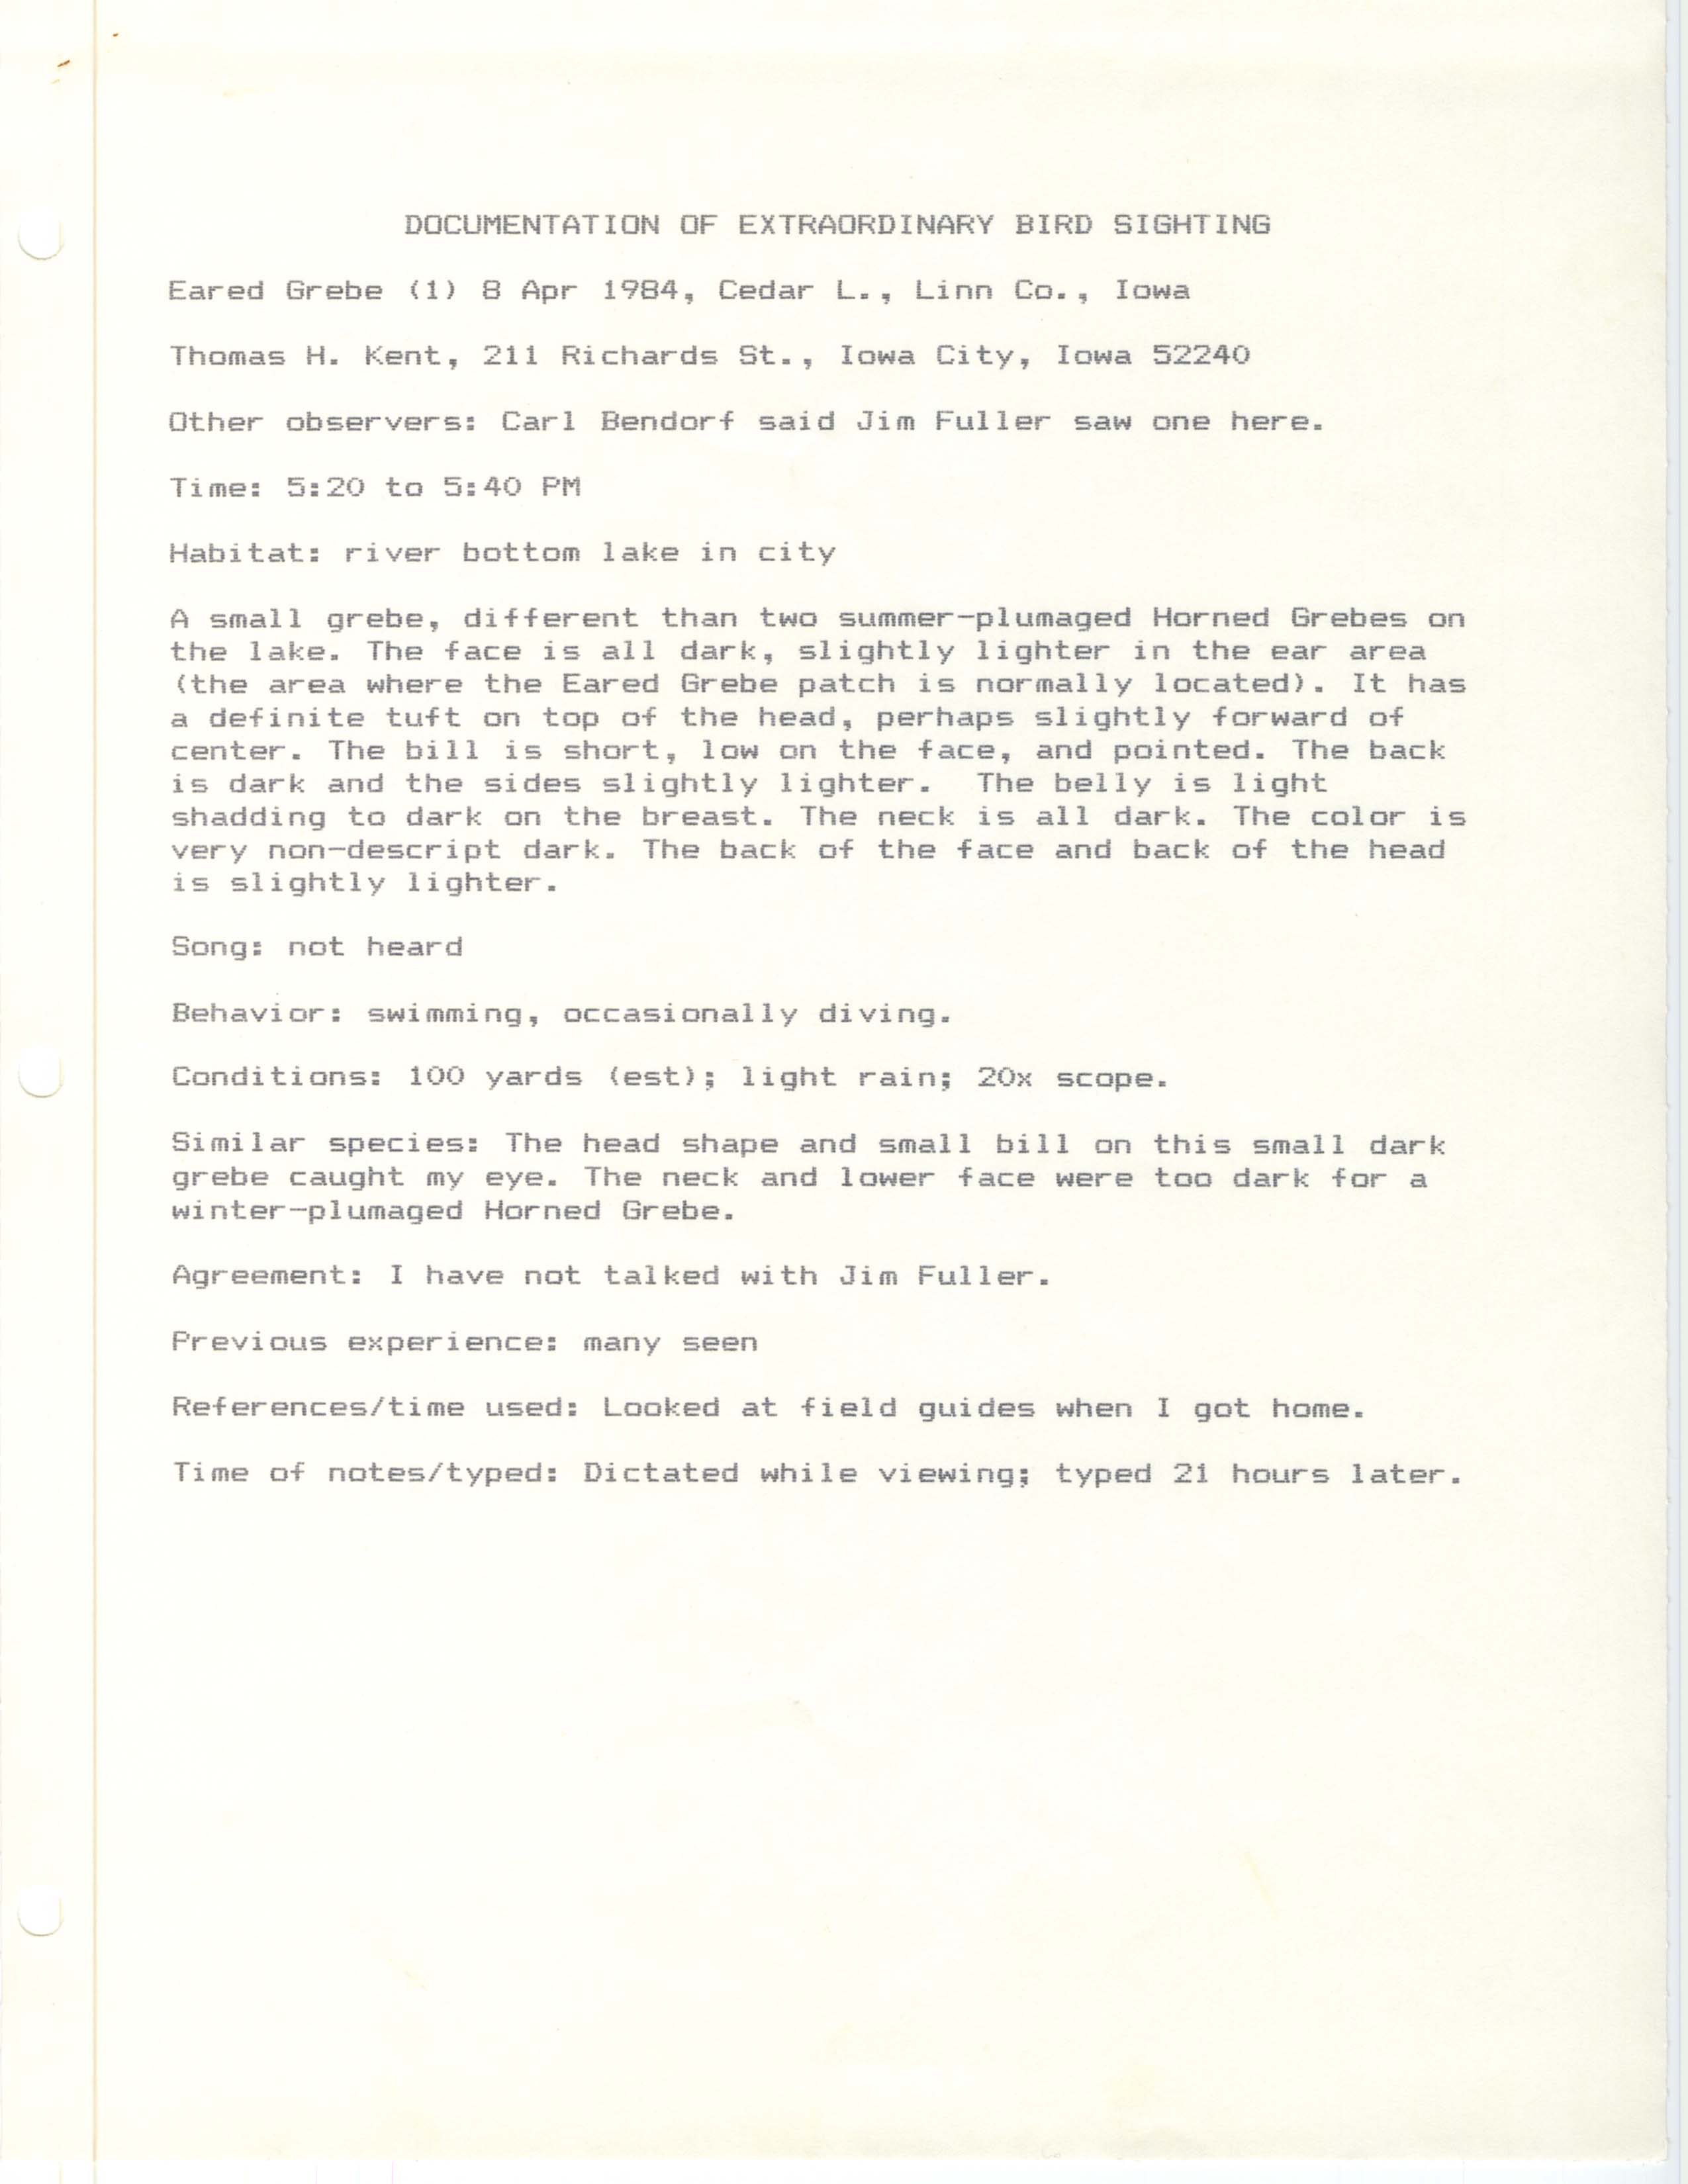 Rare bird documentation form for Eared Grebe at Cedar Lake, 1984